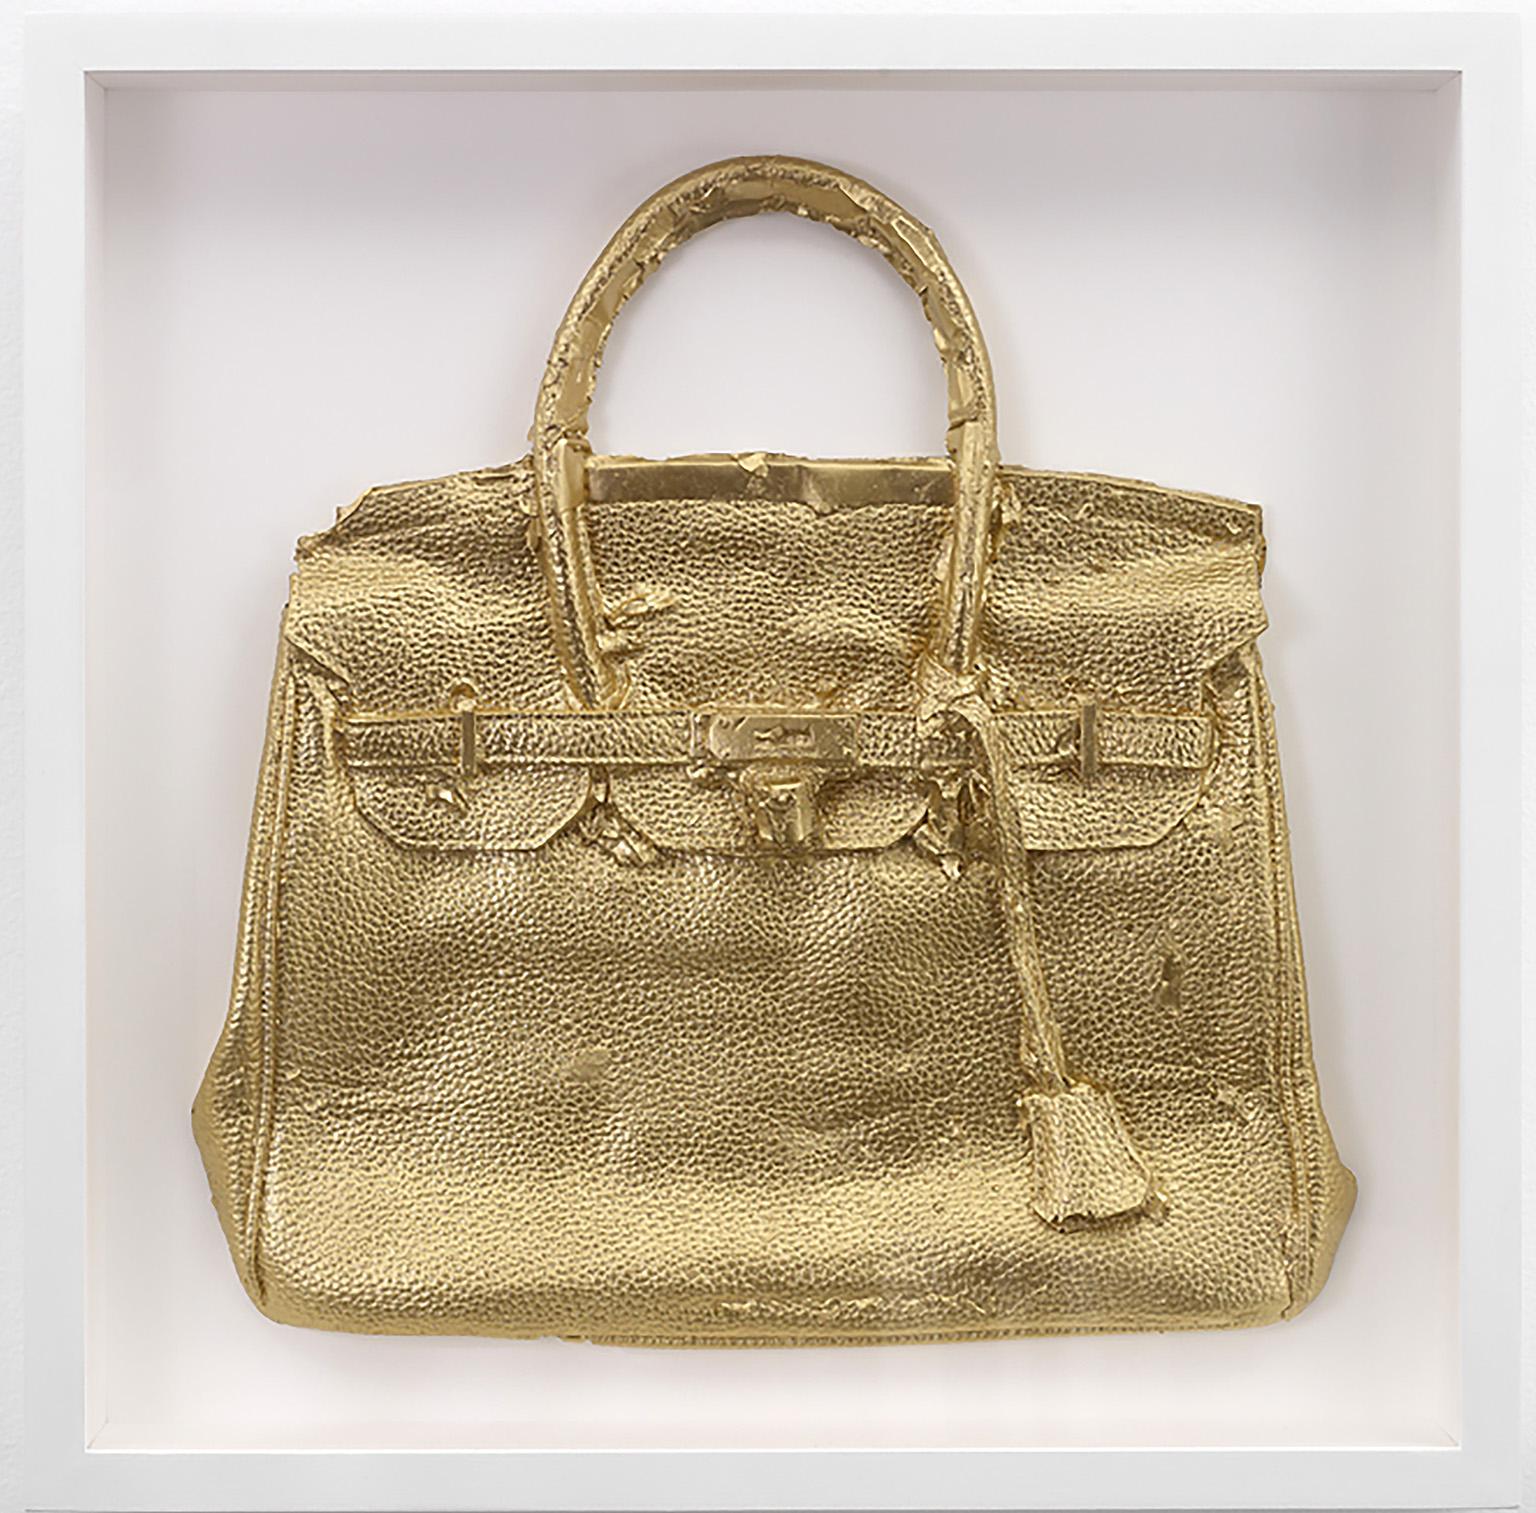 Homemade Hermes Birkin Bag (Gold), 2015, by Shelter Serra